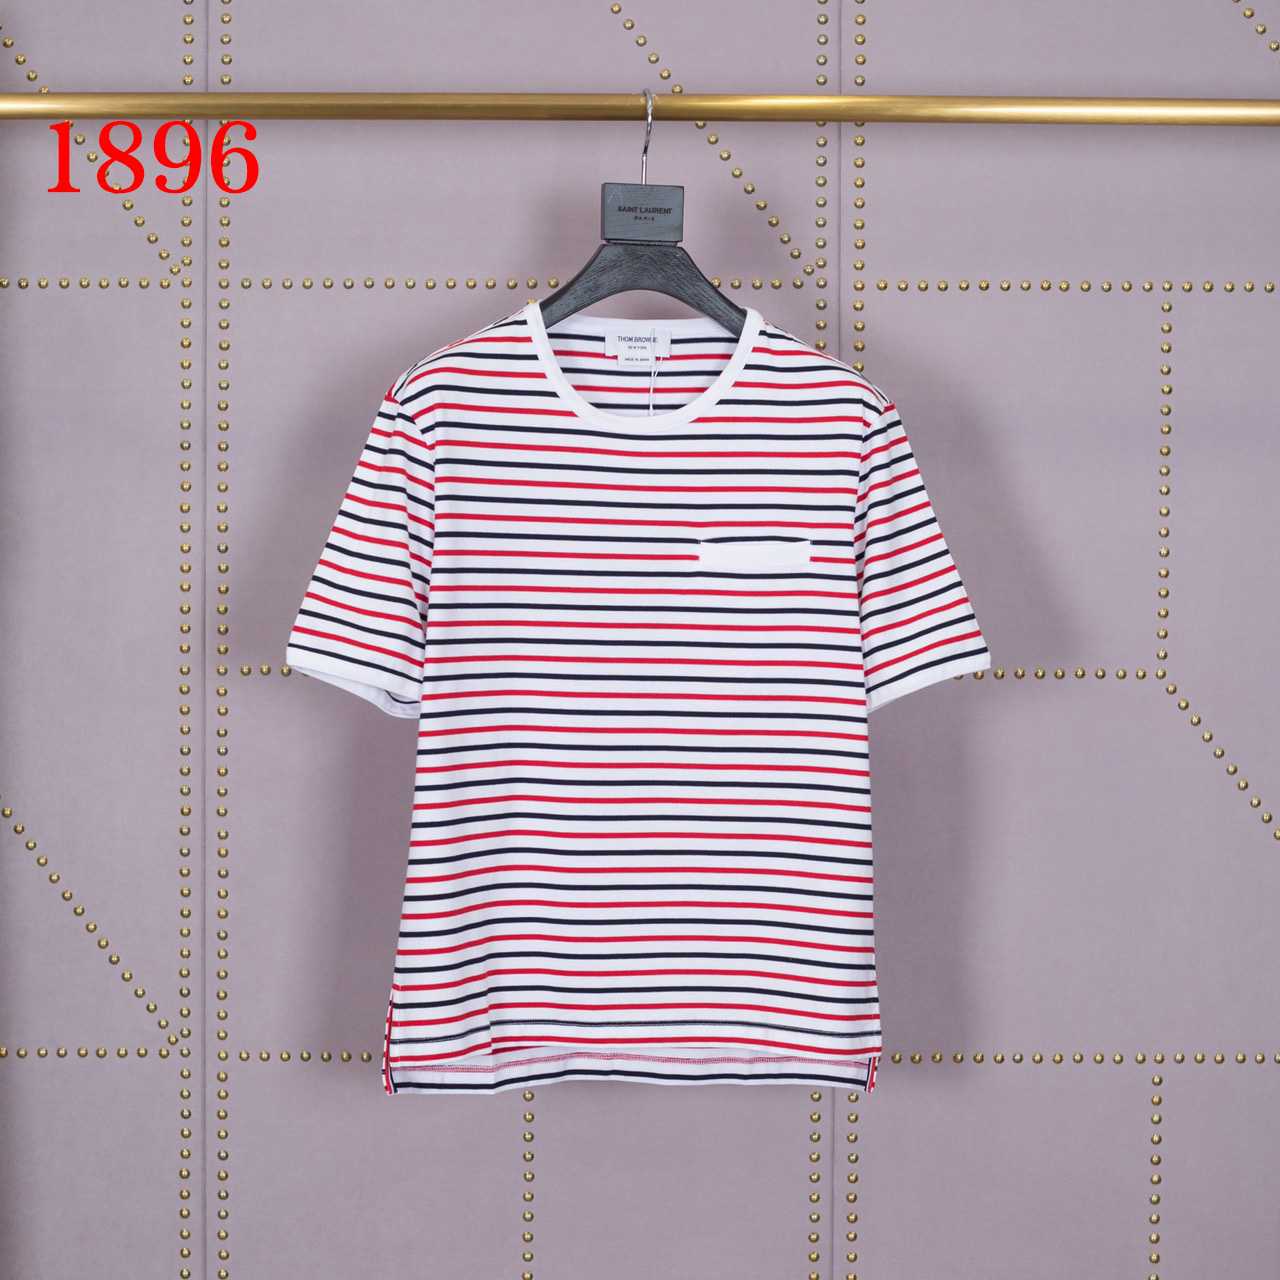 Thom Browne Striped Cotton Jersey T-shirt   1896 - DesignerGu